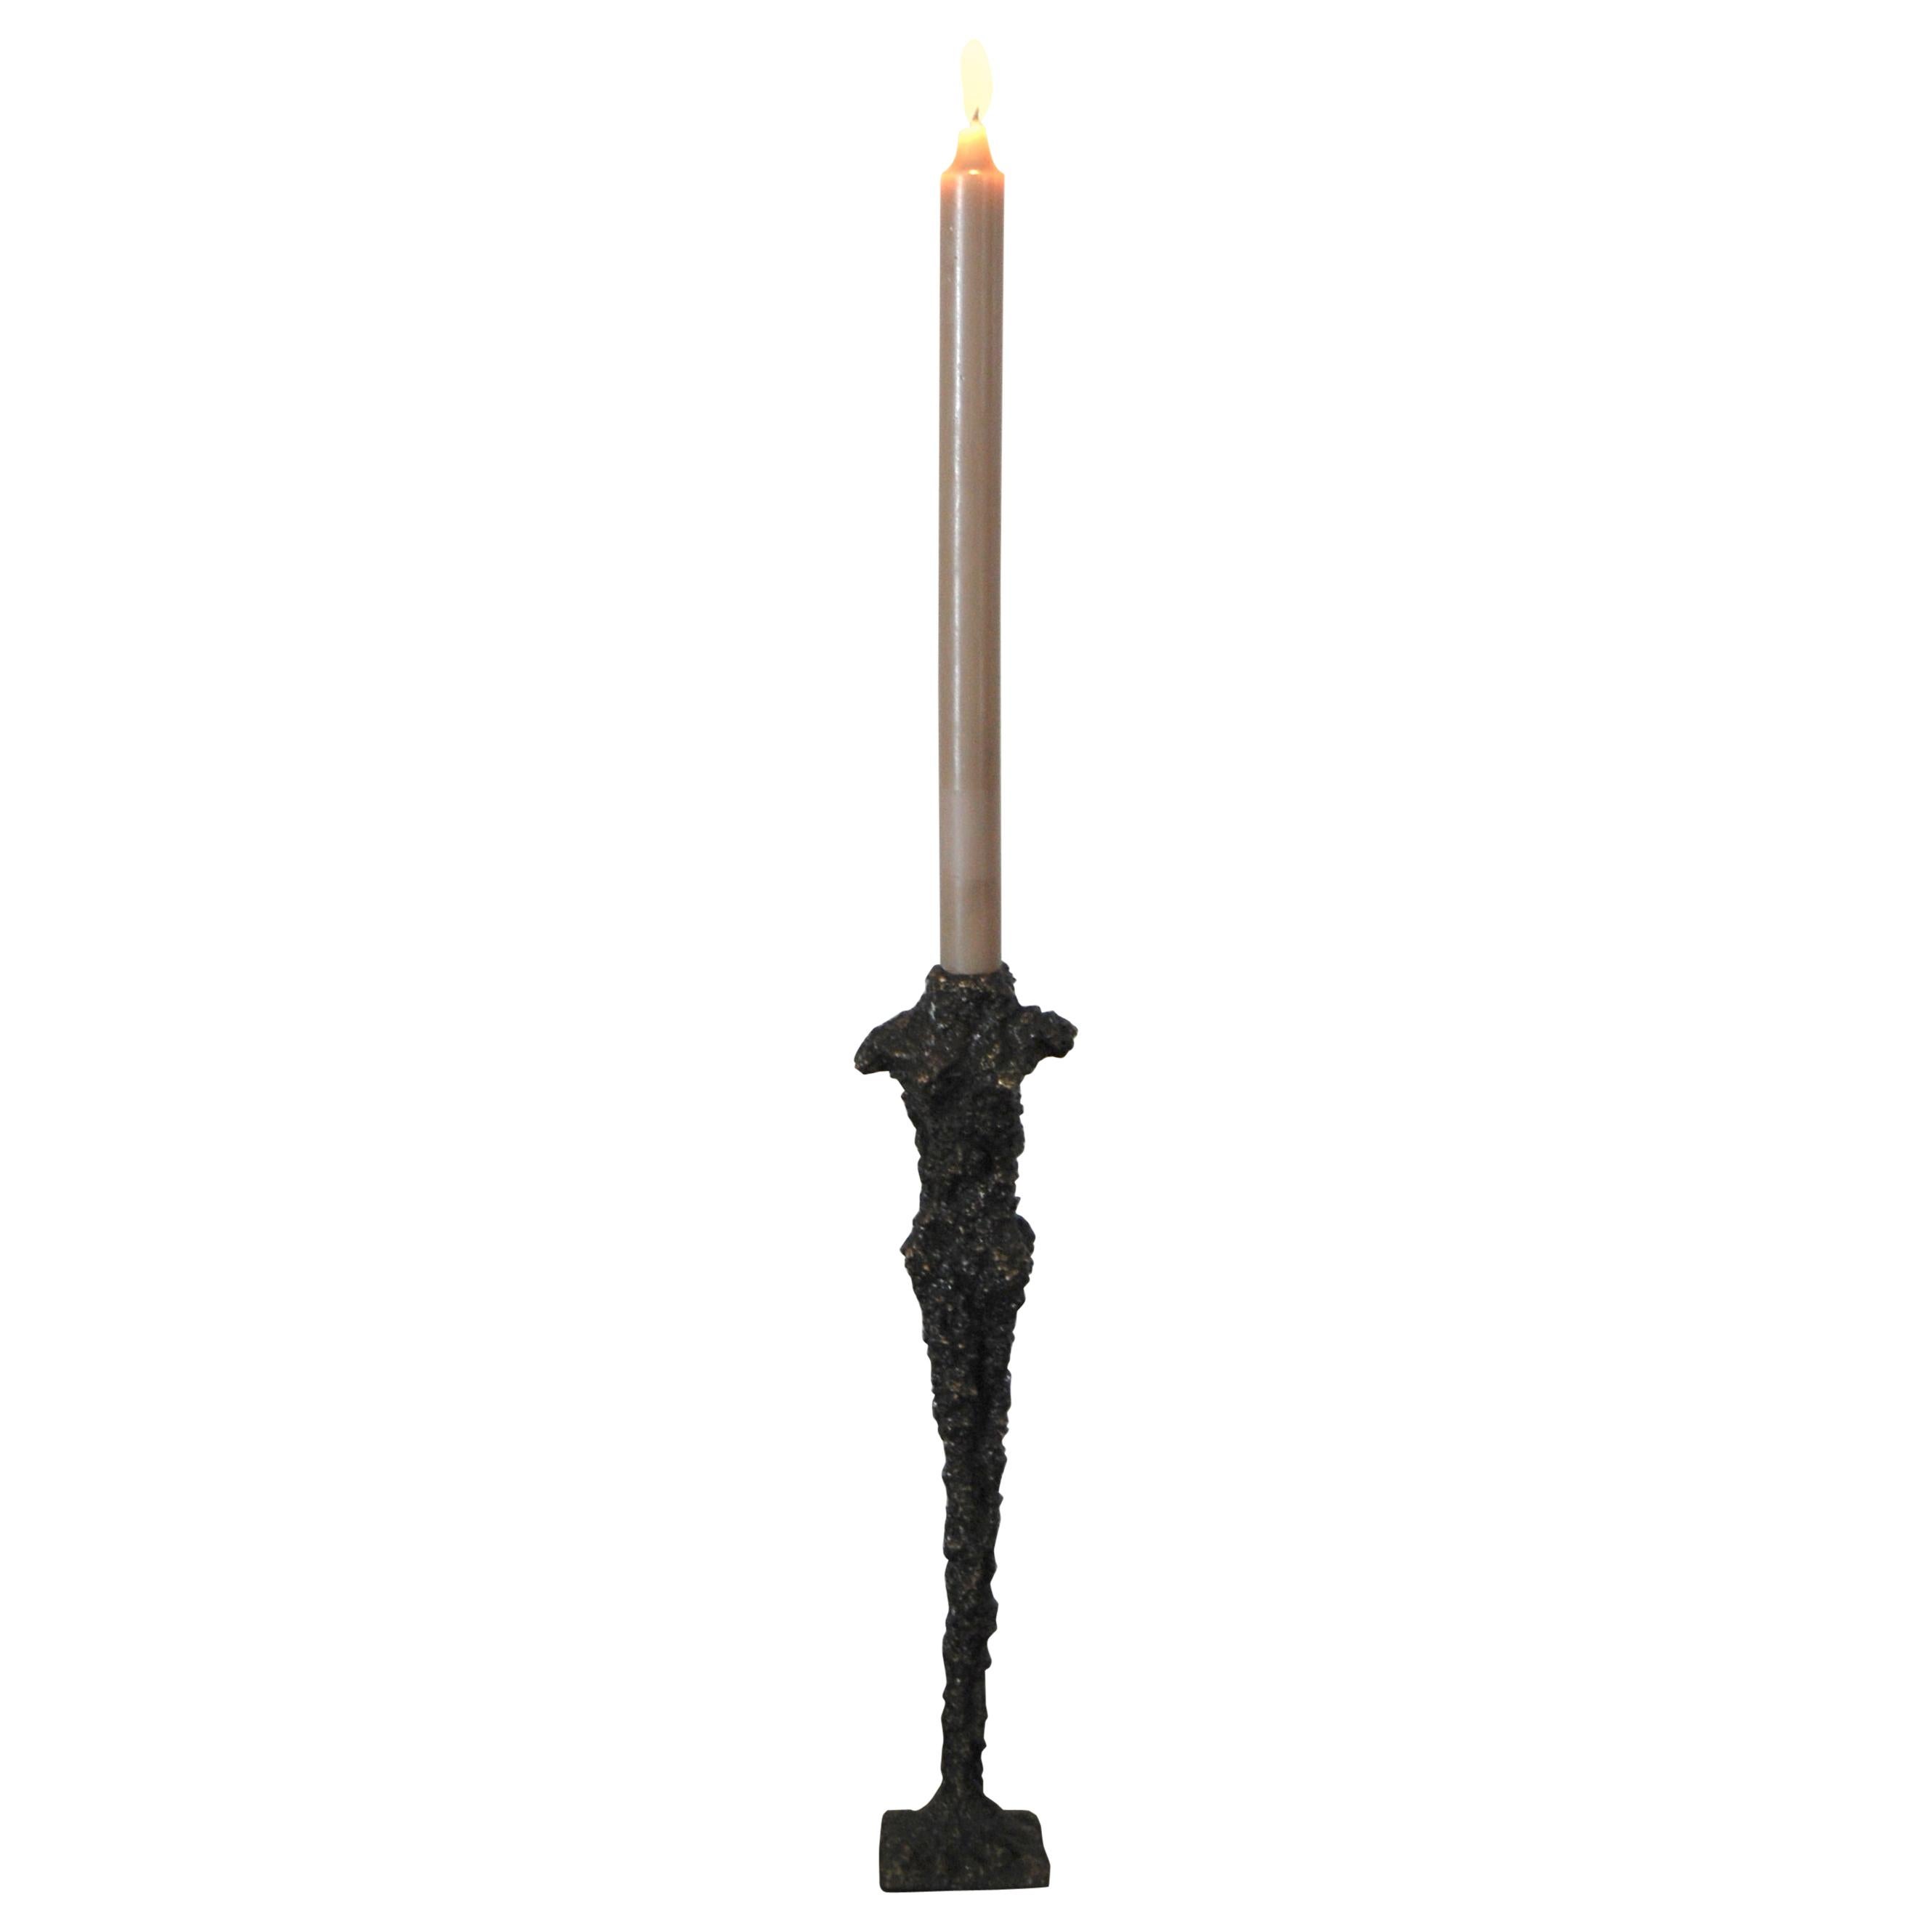 Dunkelbronze-Kerzenhalter von FAKASAKA Design